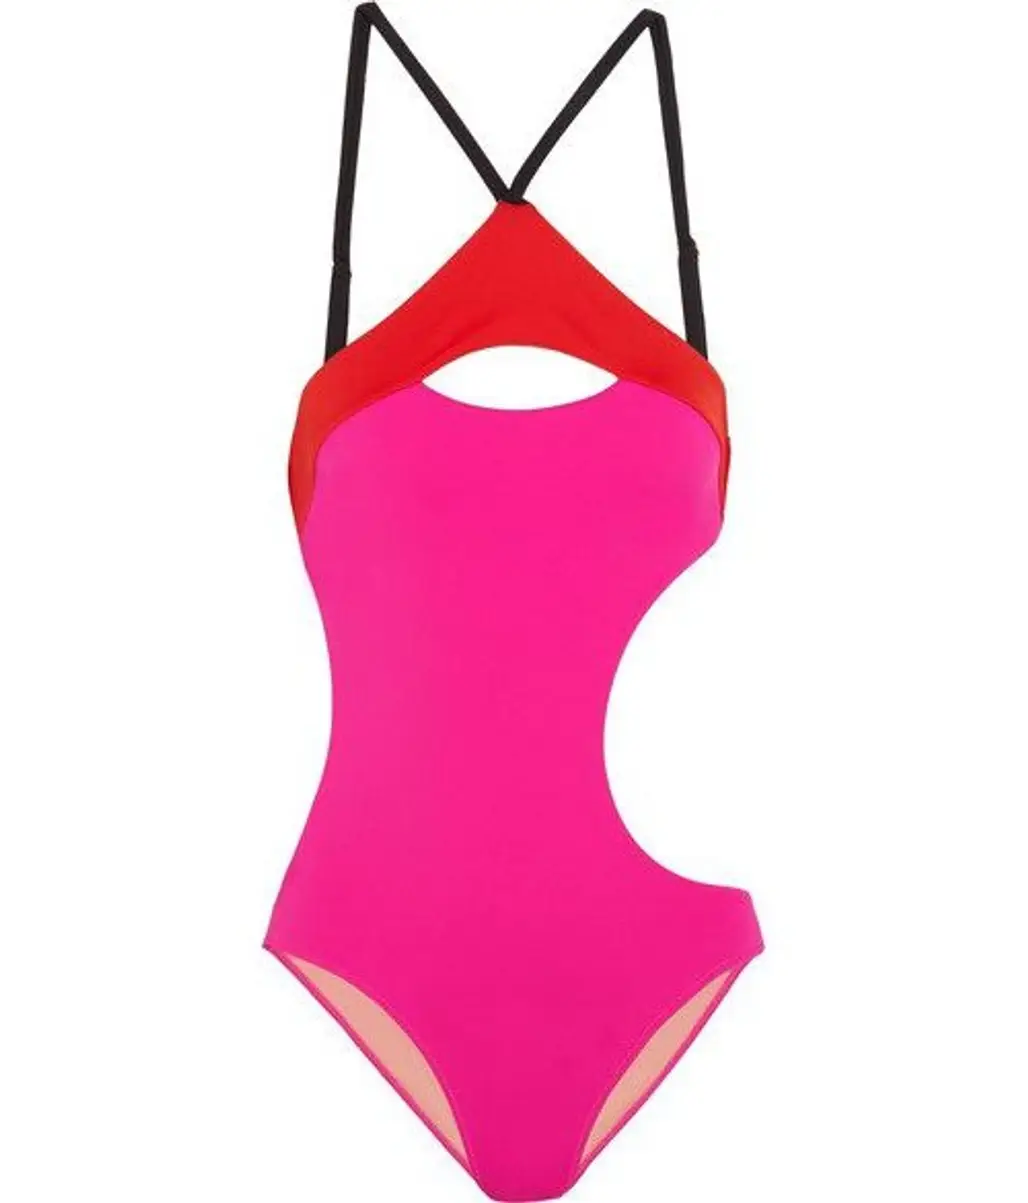 swimwear, one piece swimsuit, pink, clothing, undergarment,